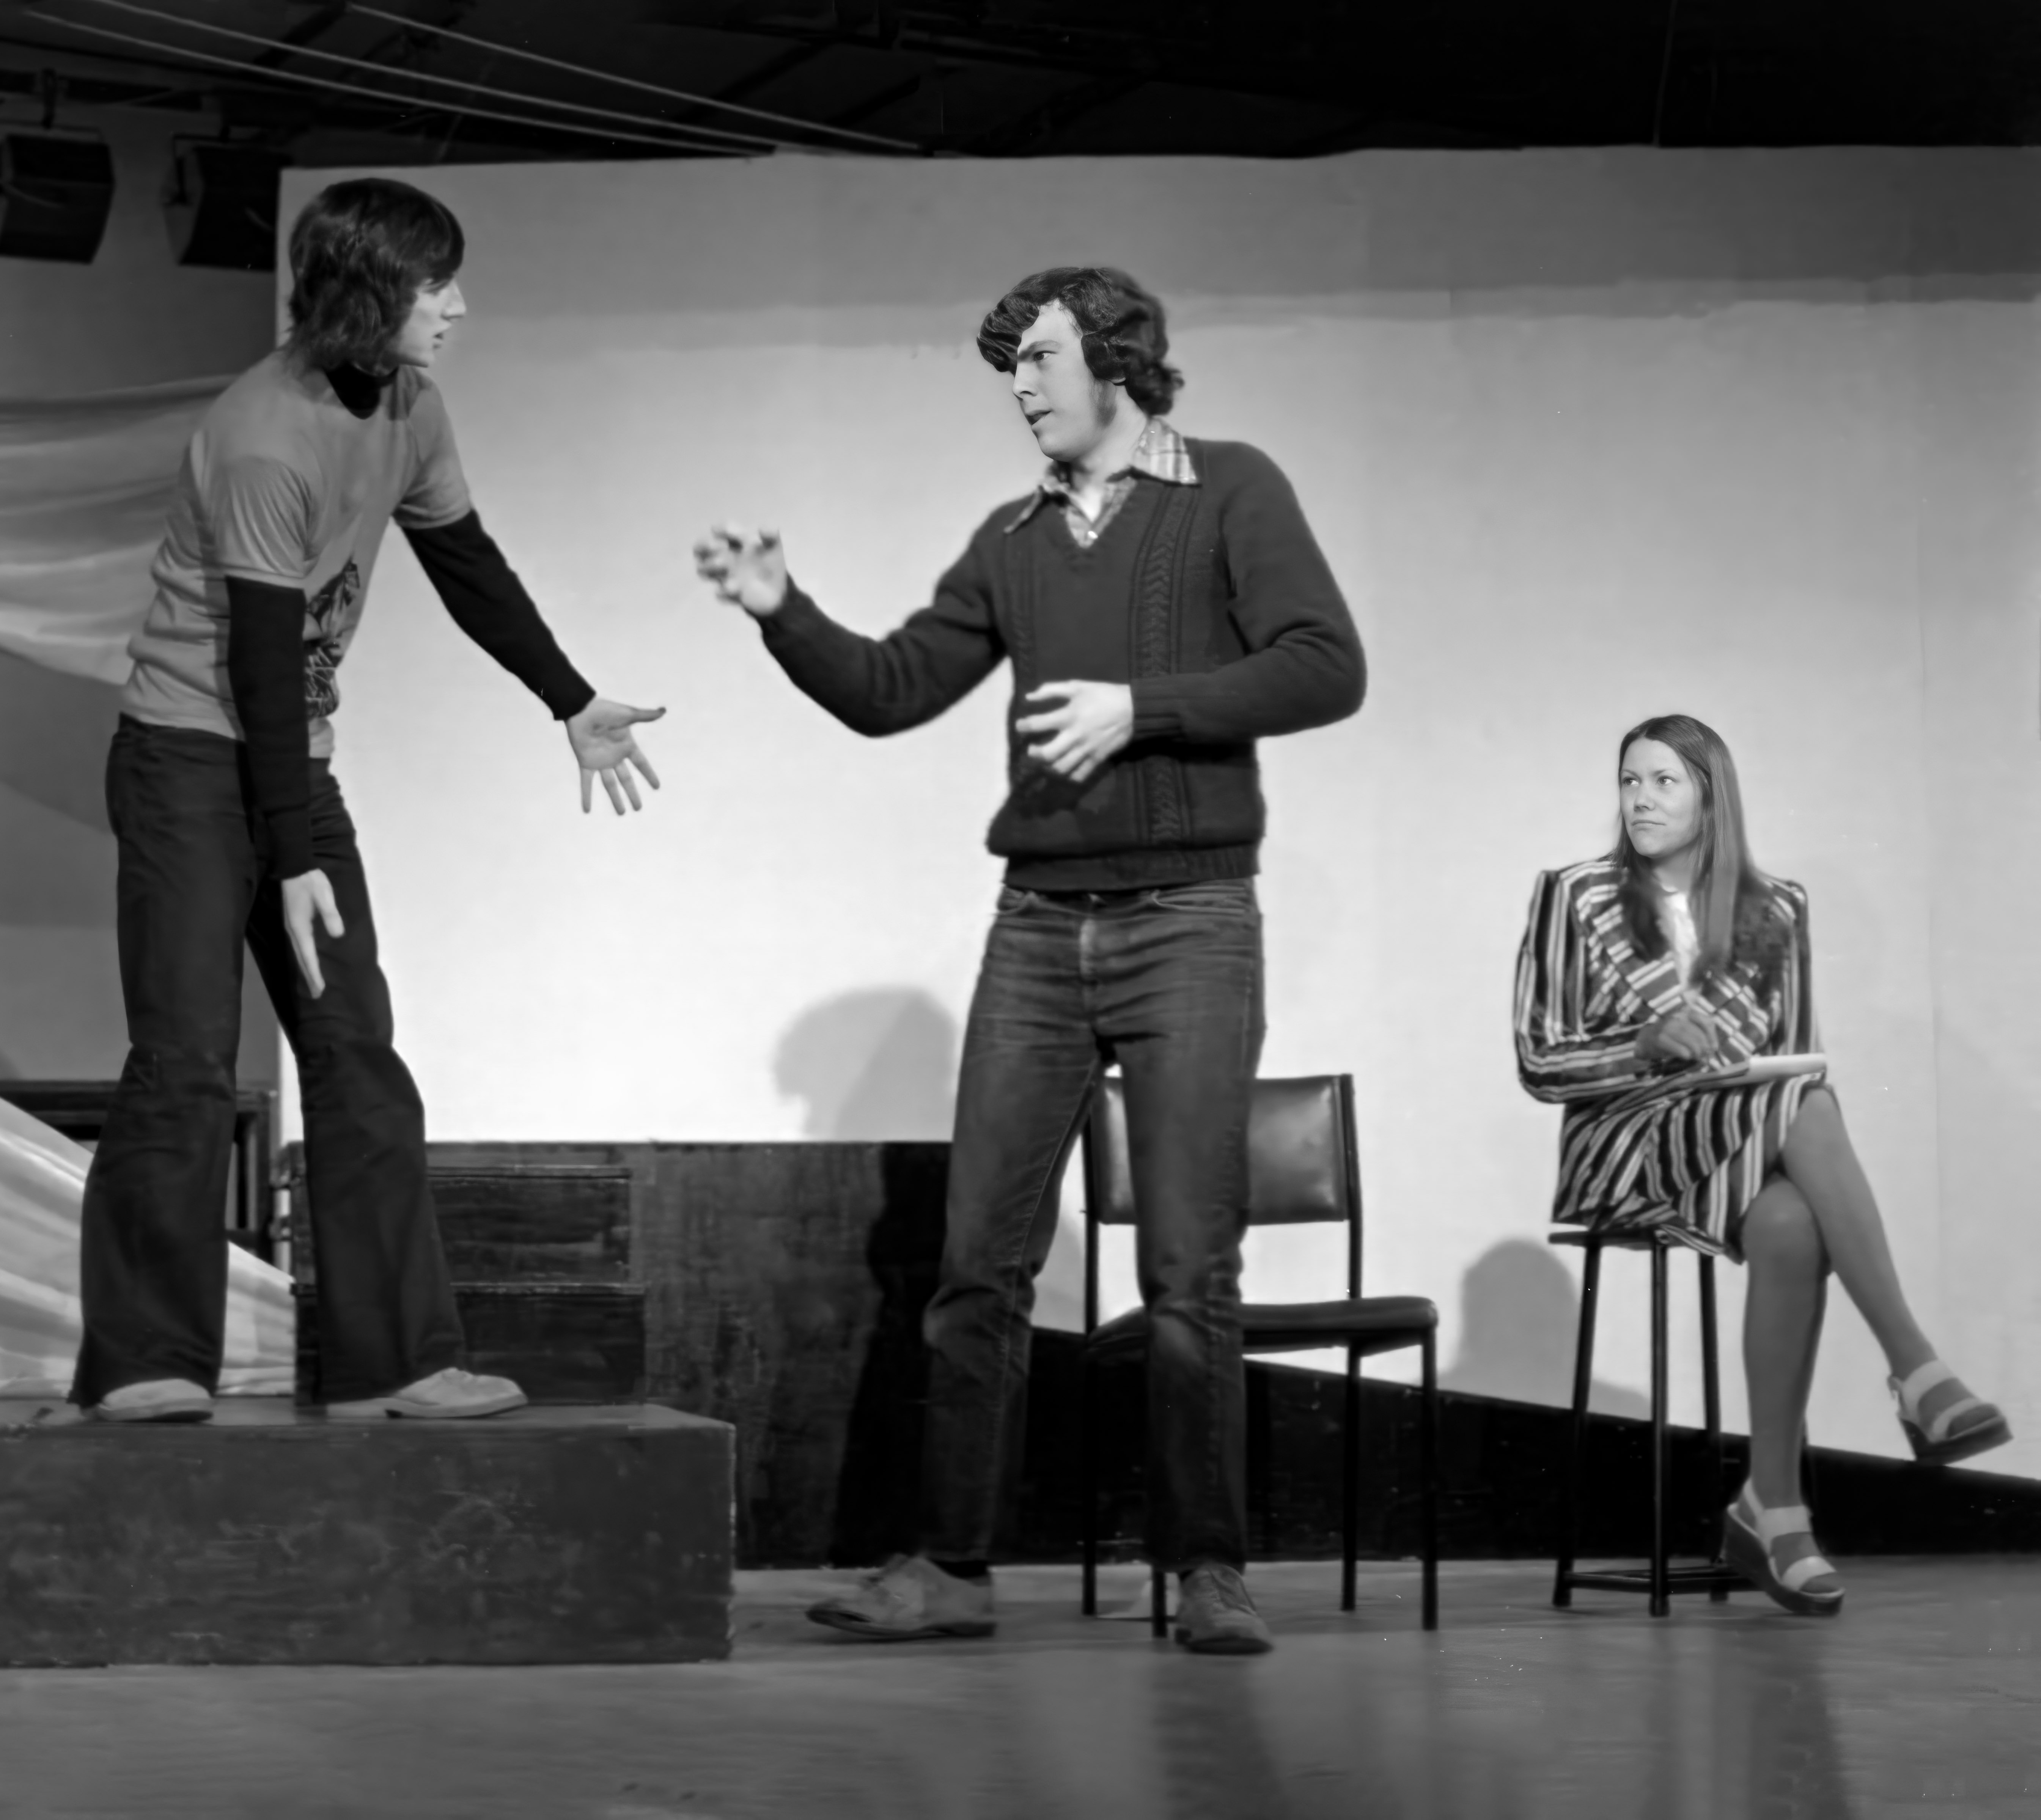 Steven Morton, One Hand Clapping 1974, Caulfield High School Drama production Archival pigment ink jet print Image courtesy of Steven Morton